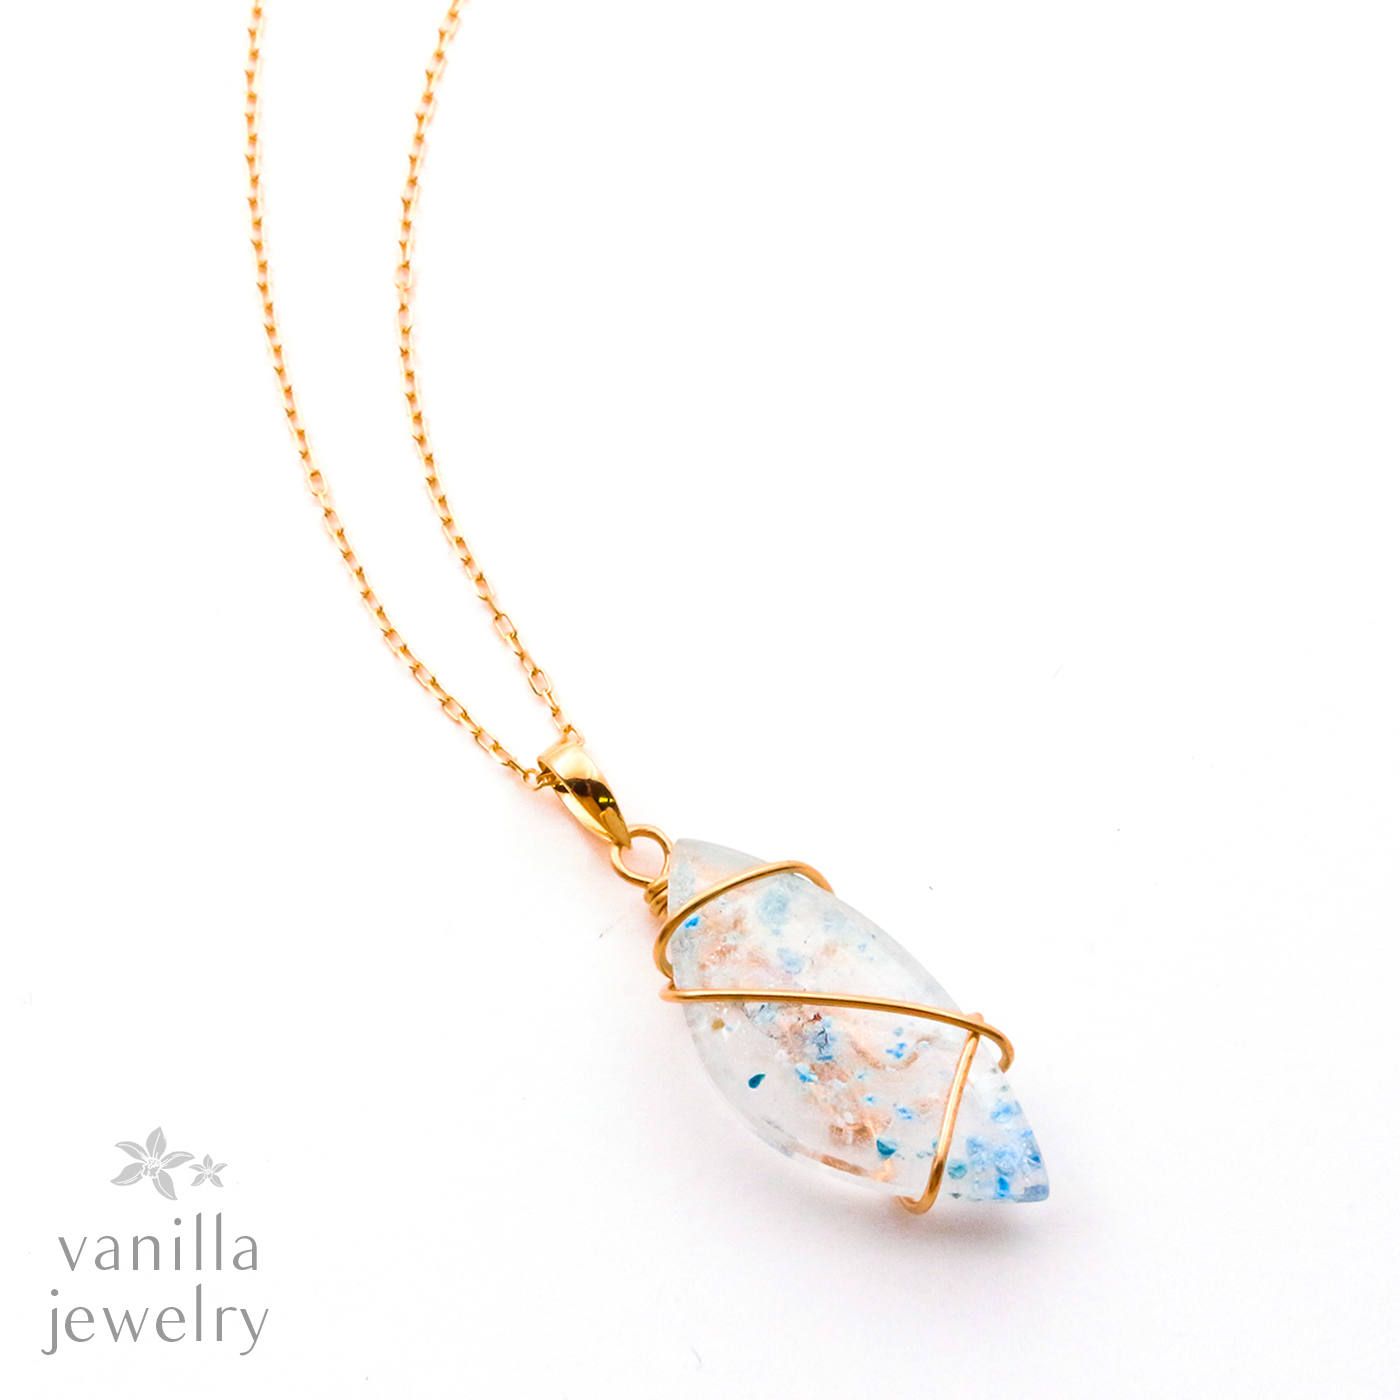 vanilla jewelry - La verite(ラヴェリーテ) コロンビア ムゾー産 